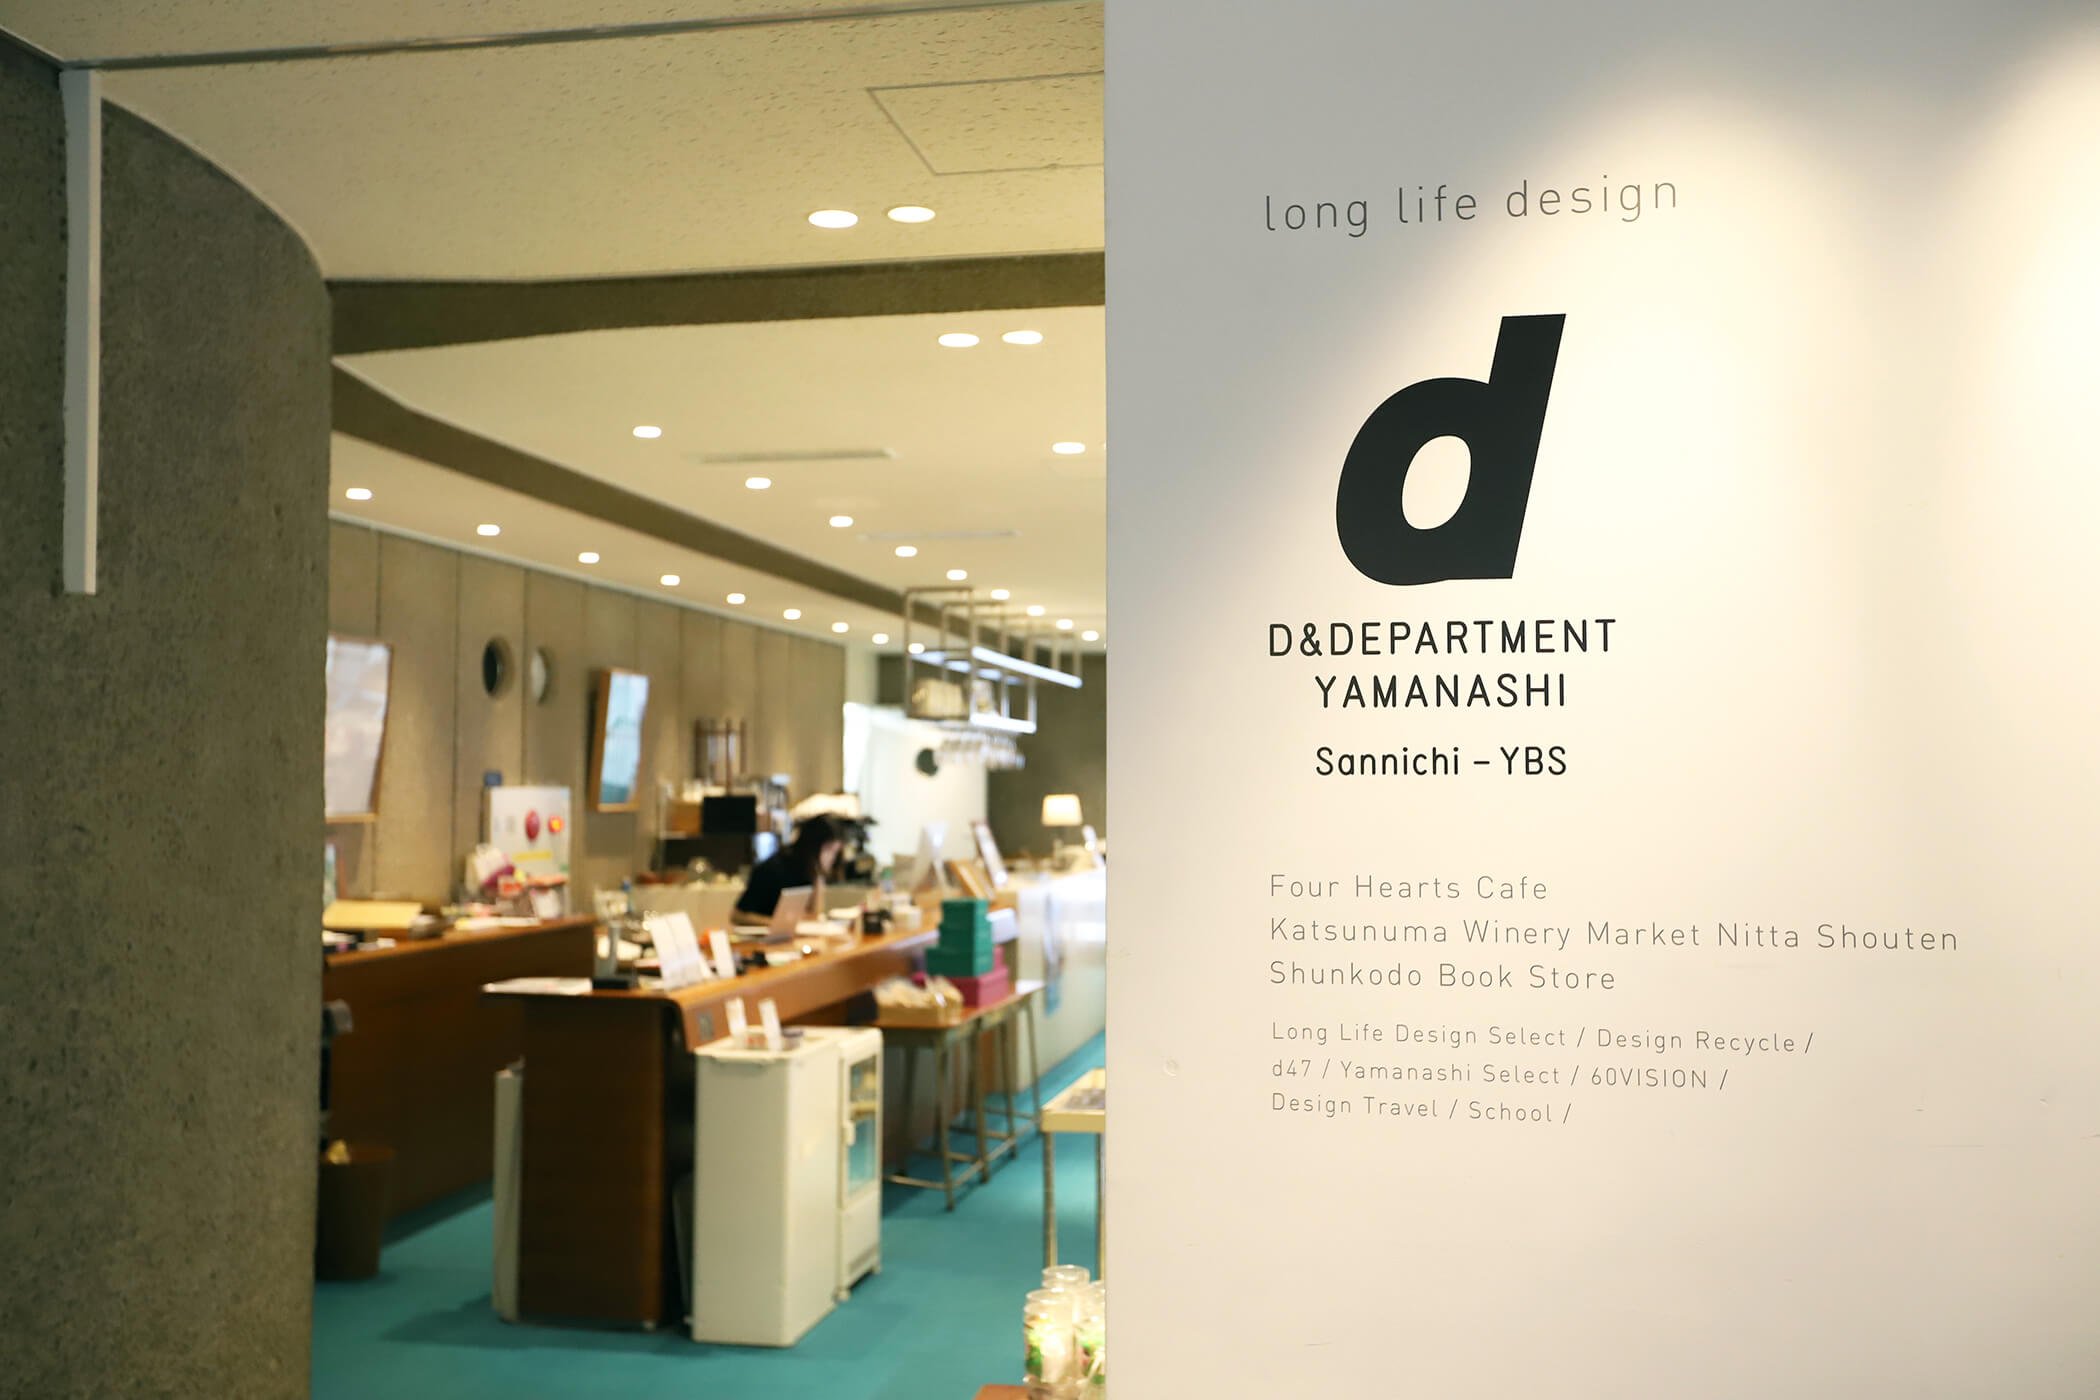 D&DEPARTMENT YAMANASHI by Sannichi-YBS 写真14